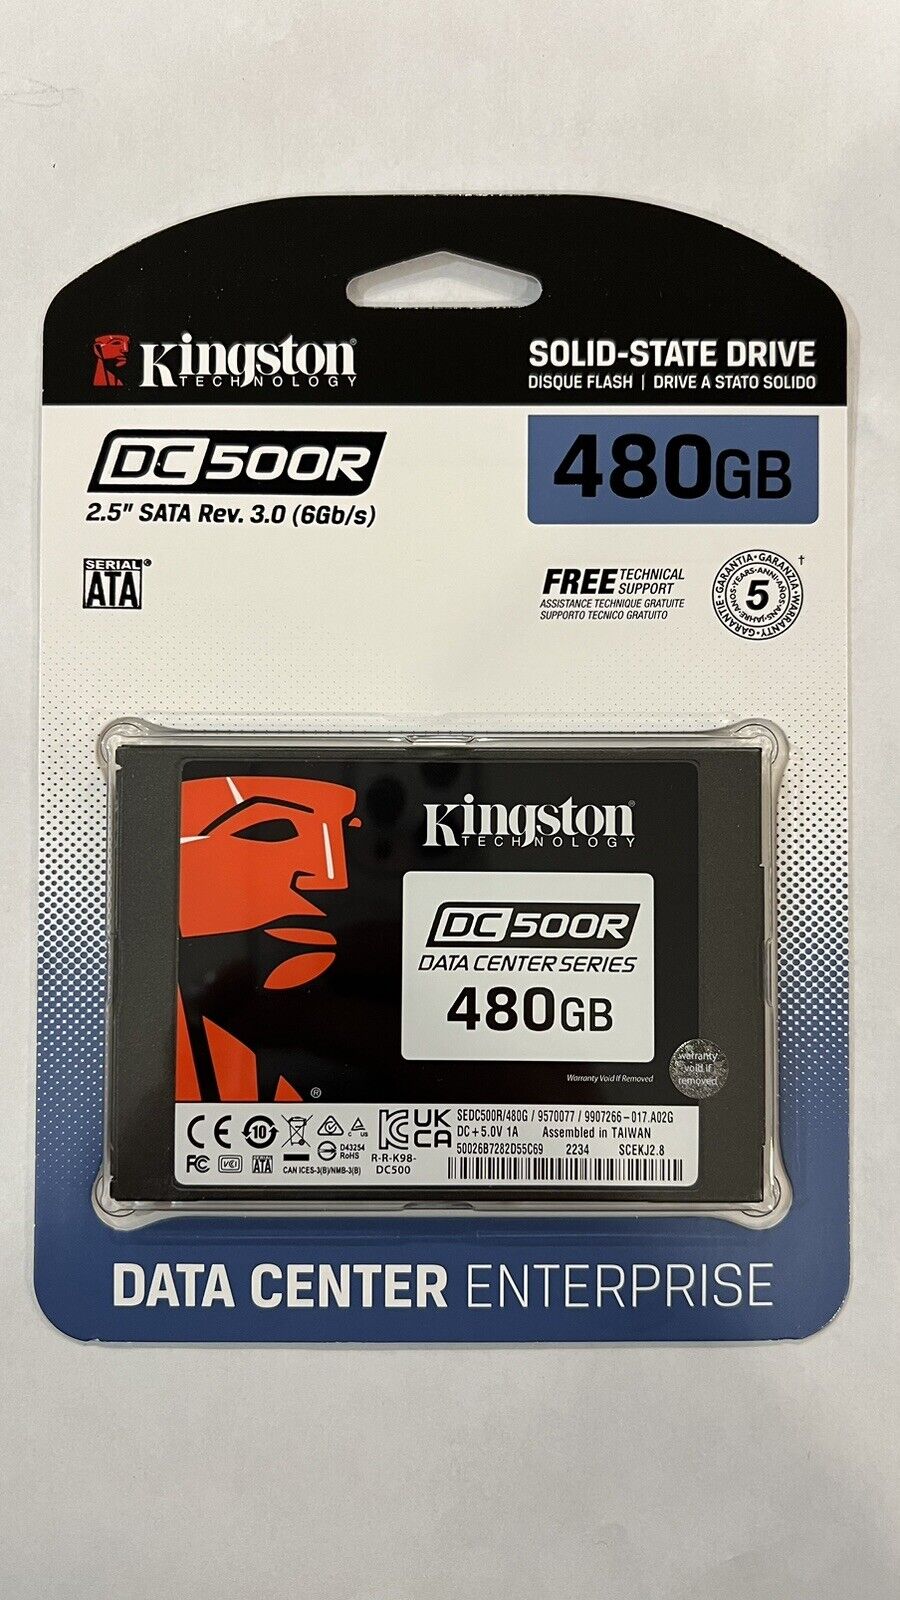 Kingston Enterprise SSD DC500R 480GB,2.5 inch Solid State Drive - SEDC500R480G